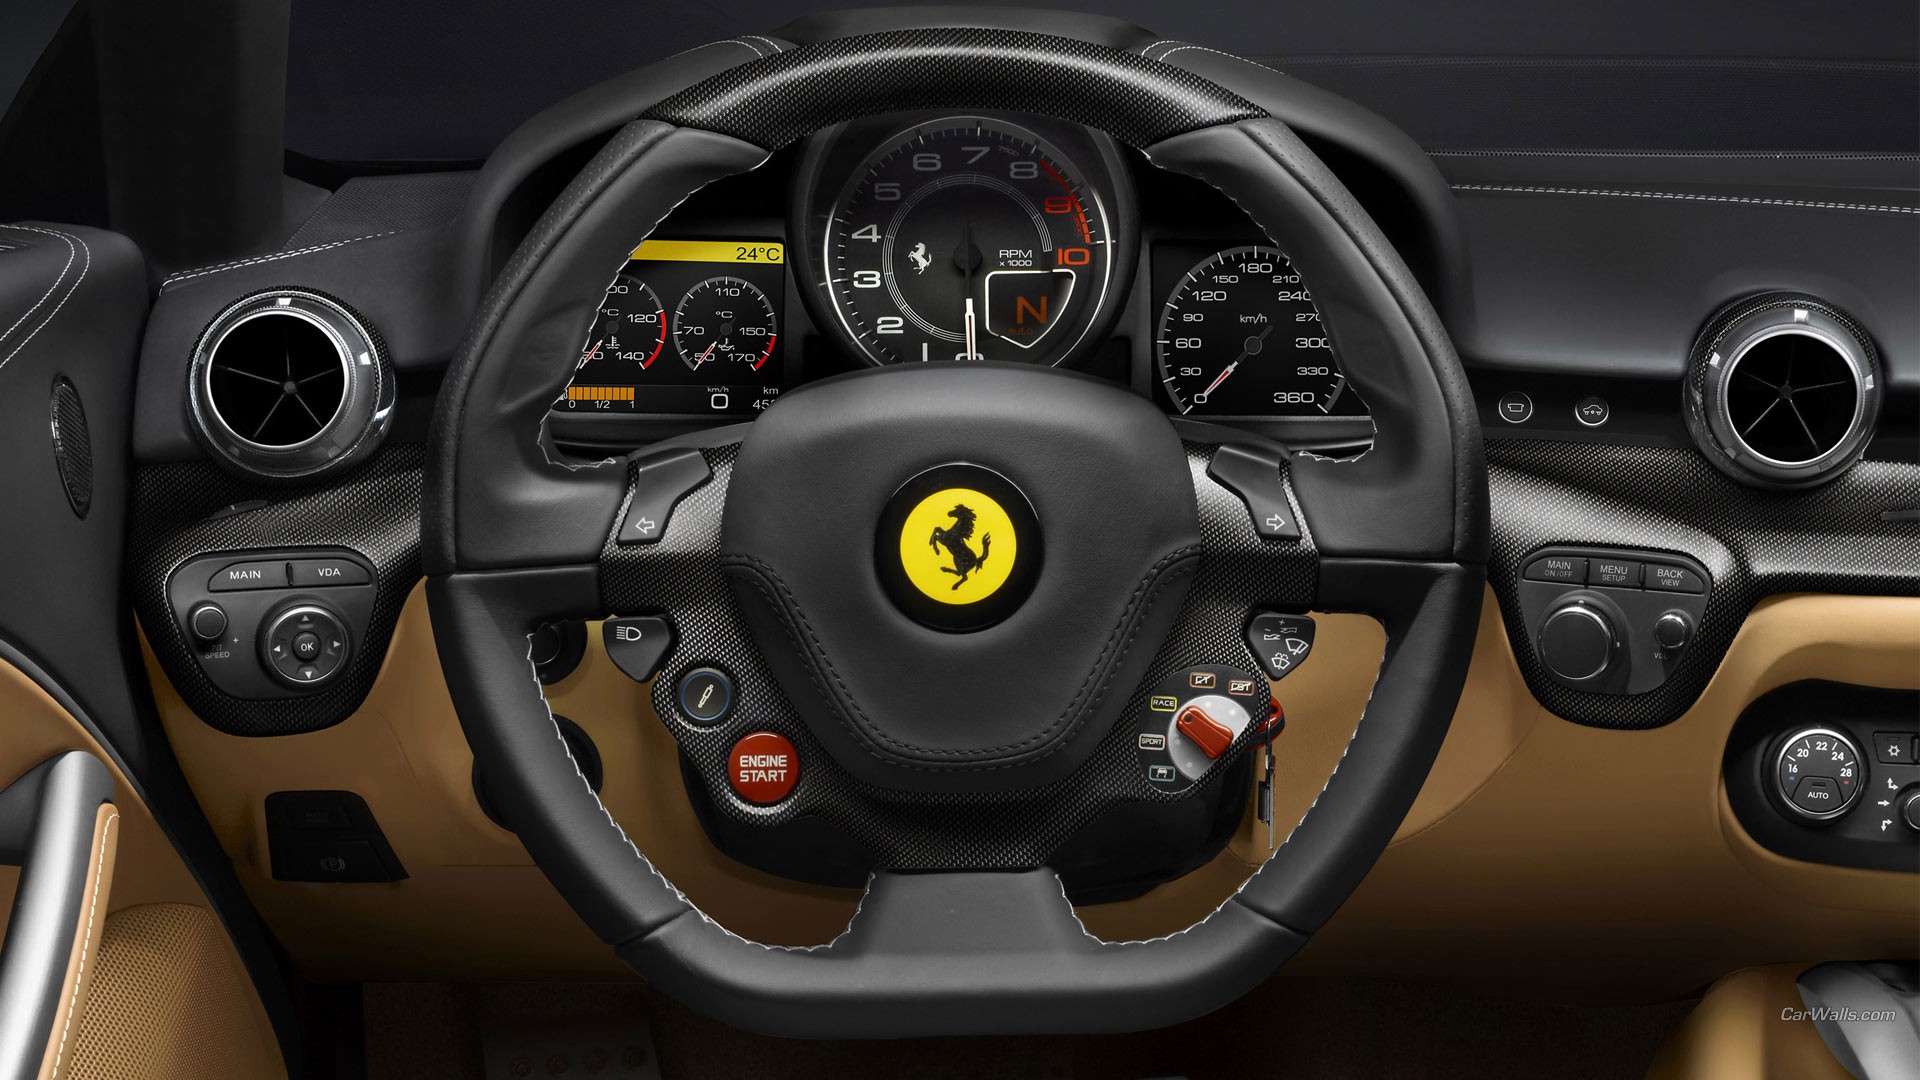 General 1920x1080 Ferrari F12berlinetta car Ferrari car interior steering wheel vehicle Grand Tour italian cars Stellantis